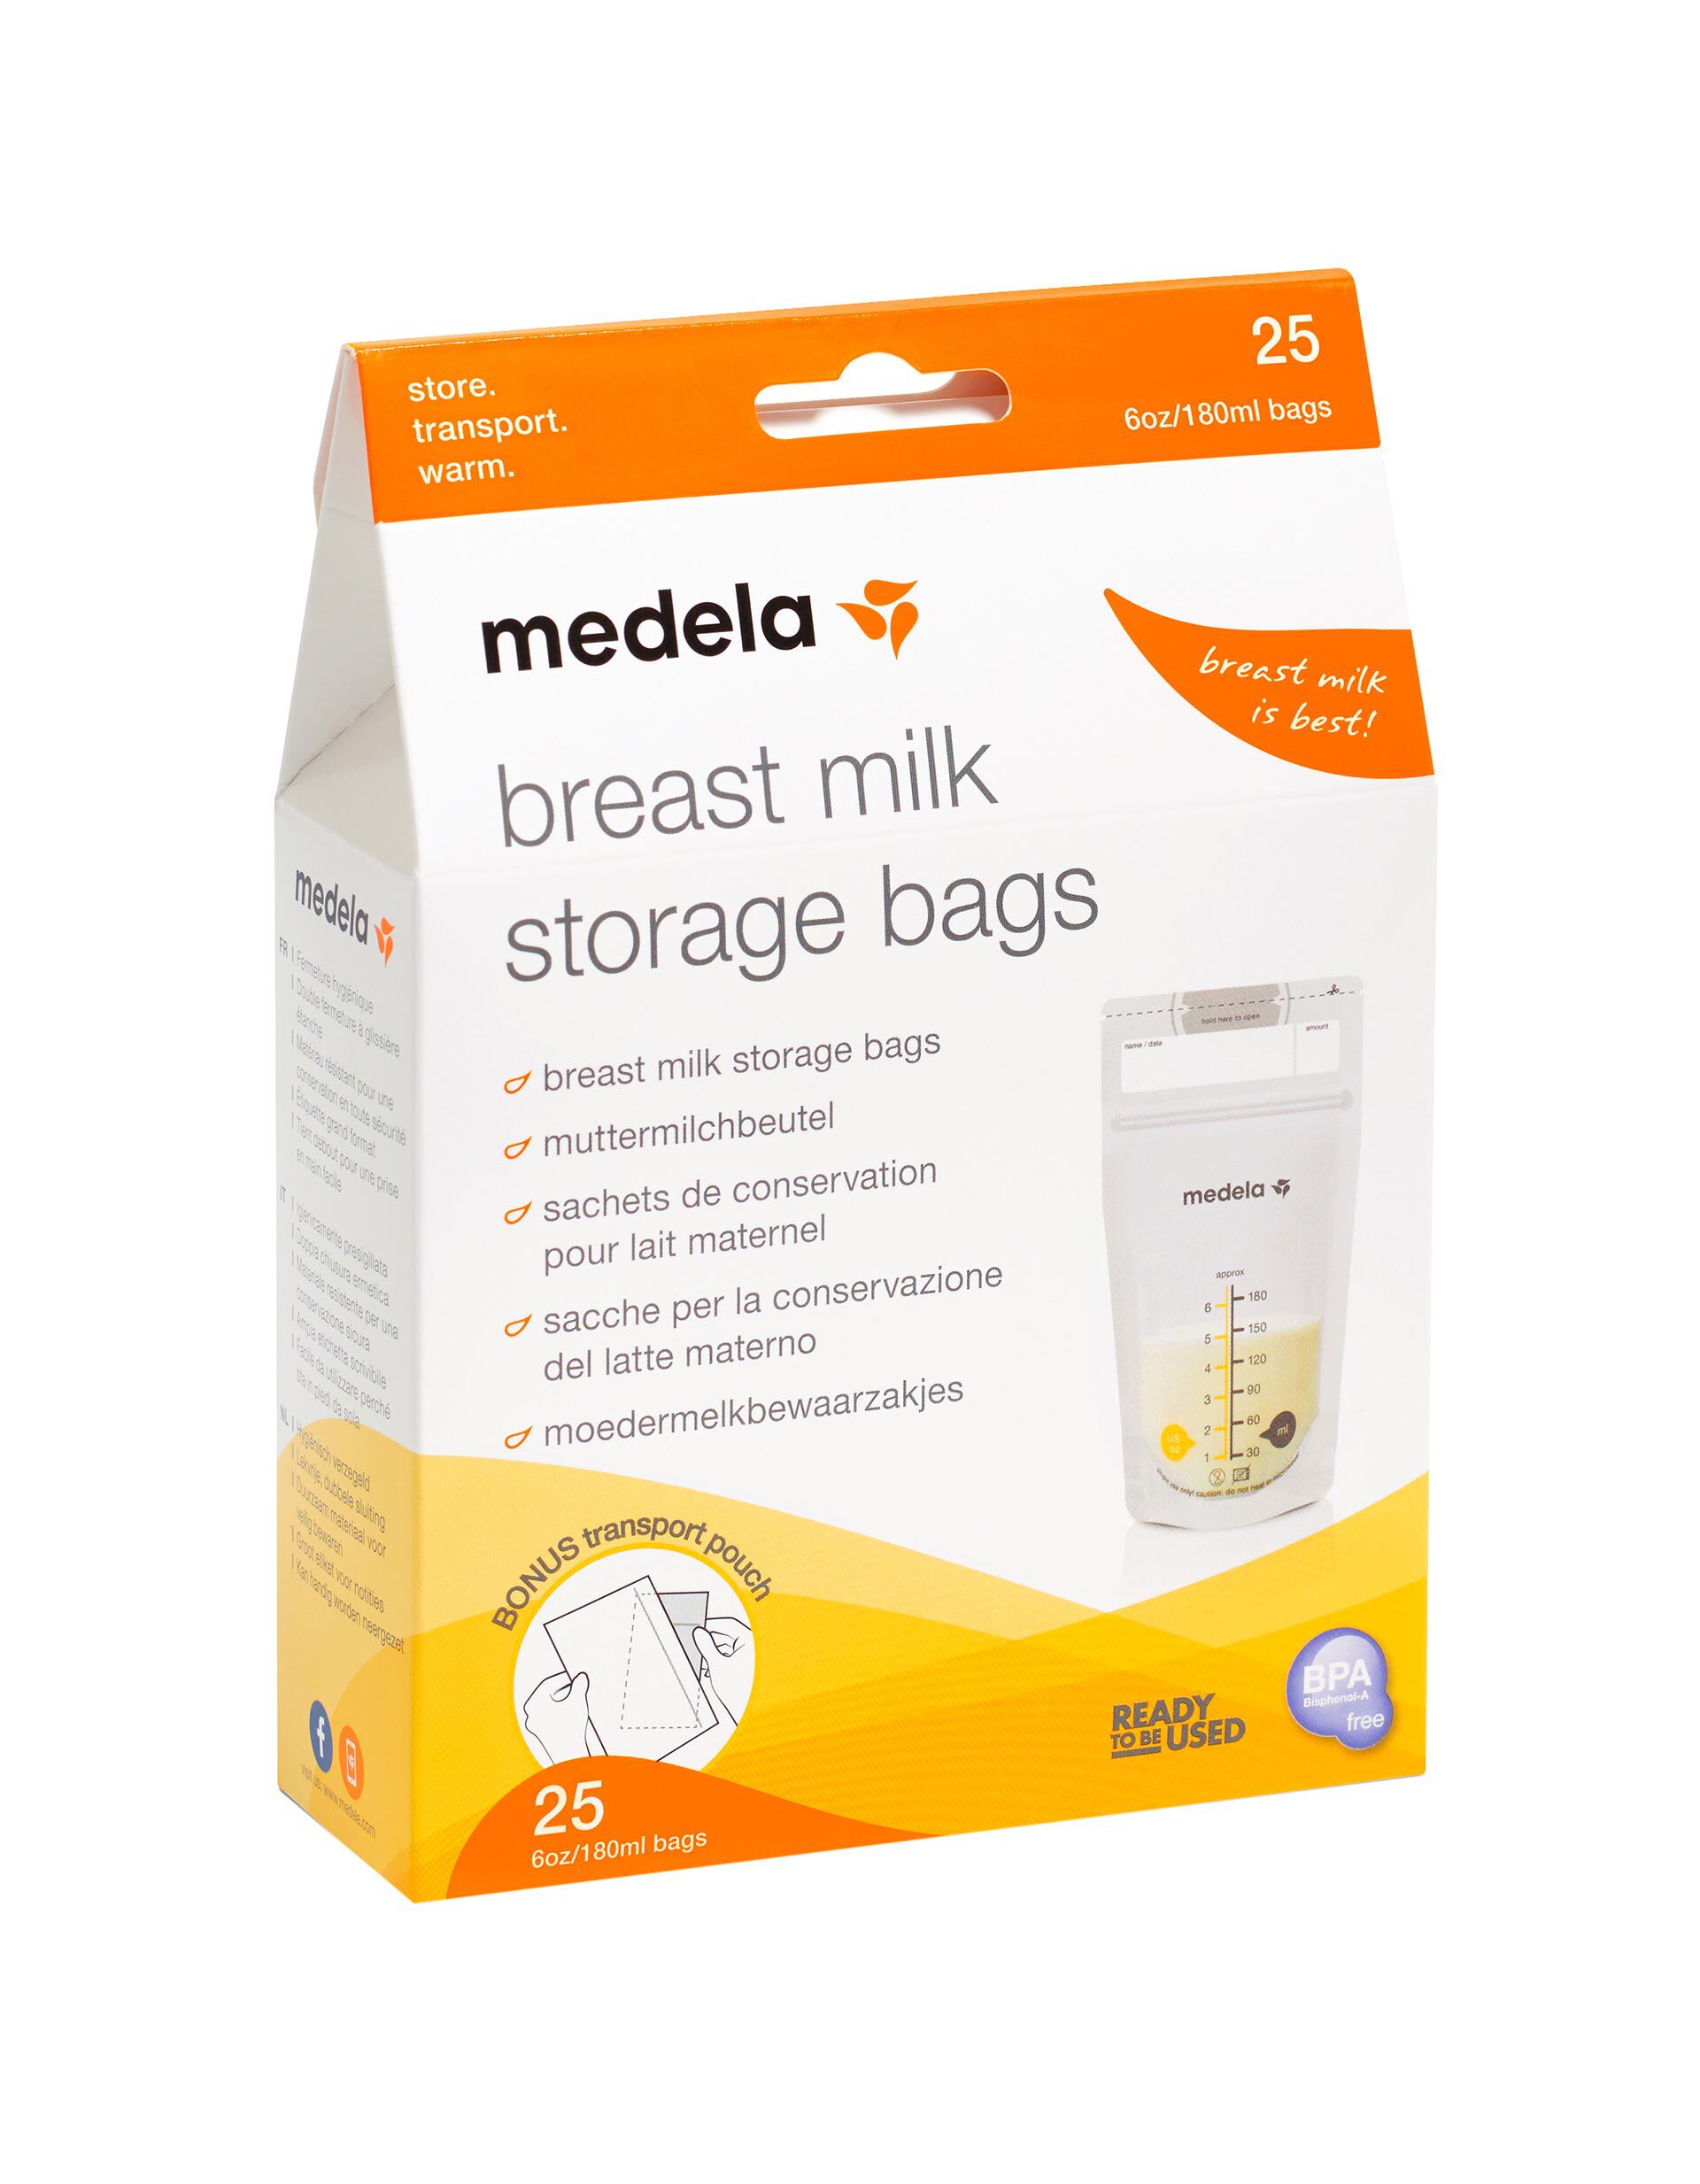 medela breast milk